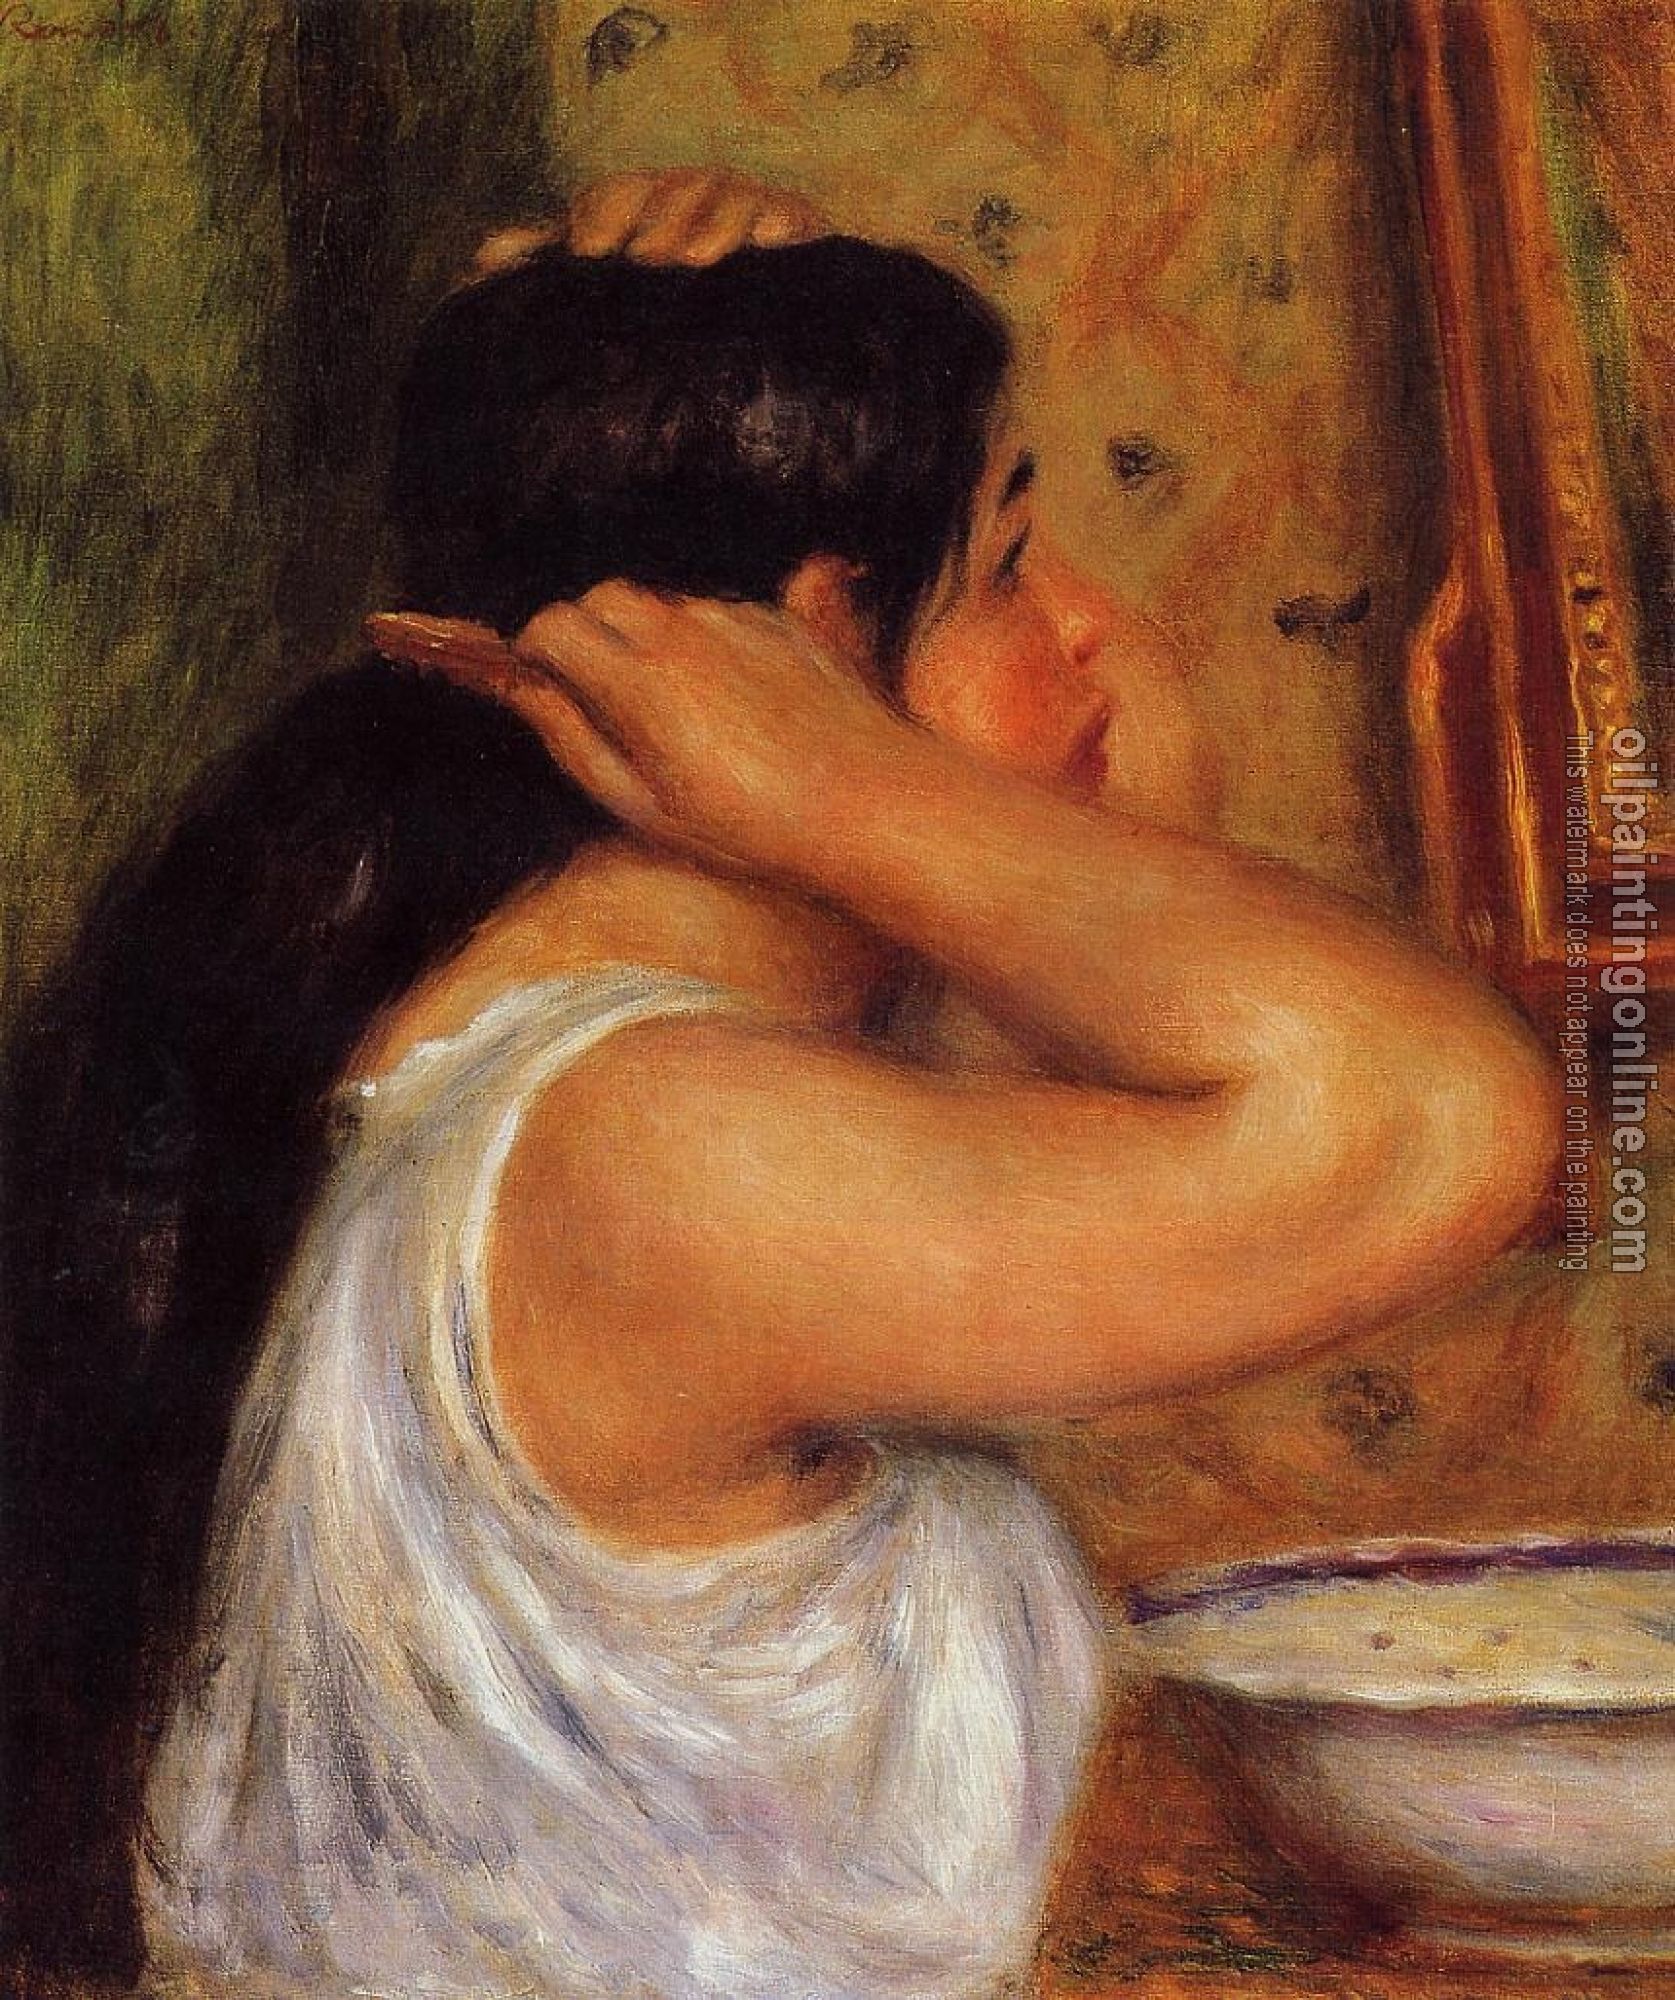 Renoir, Pierre Auguste - La Toilette, Woman Combing Her Hair